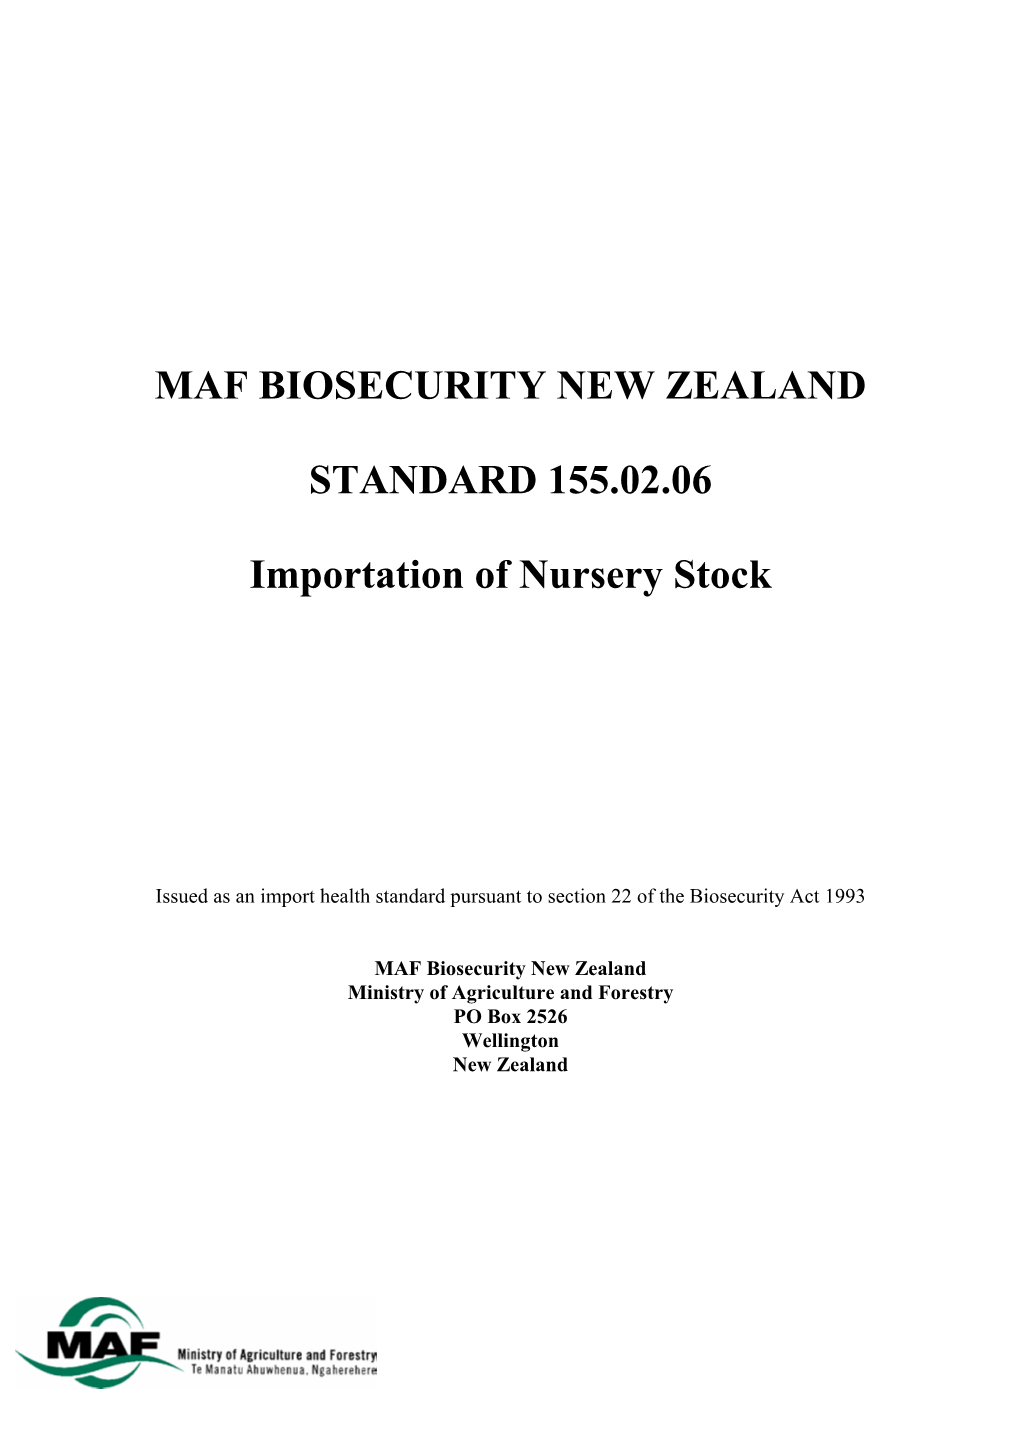 MAF BIOSECURITY NEW ZEALAND STANDARD 155.02.06 Importation